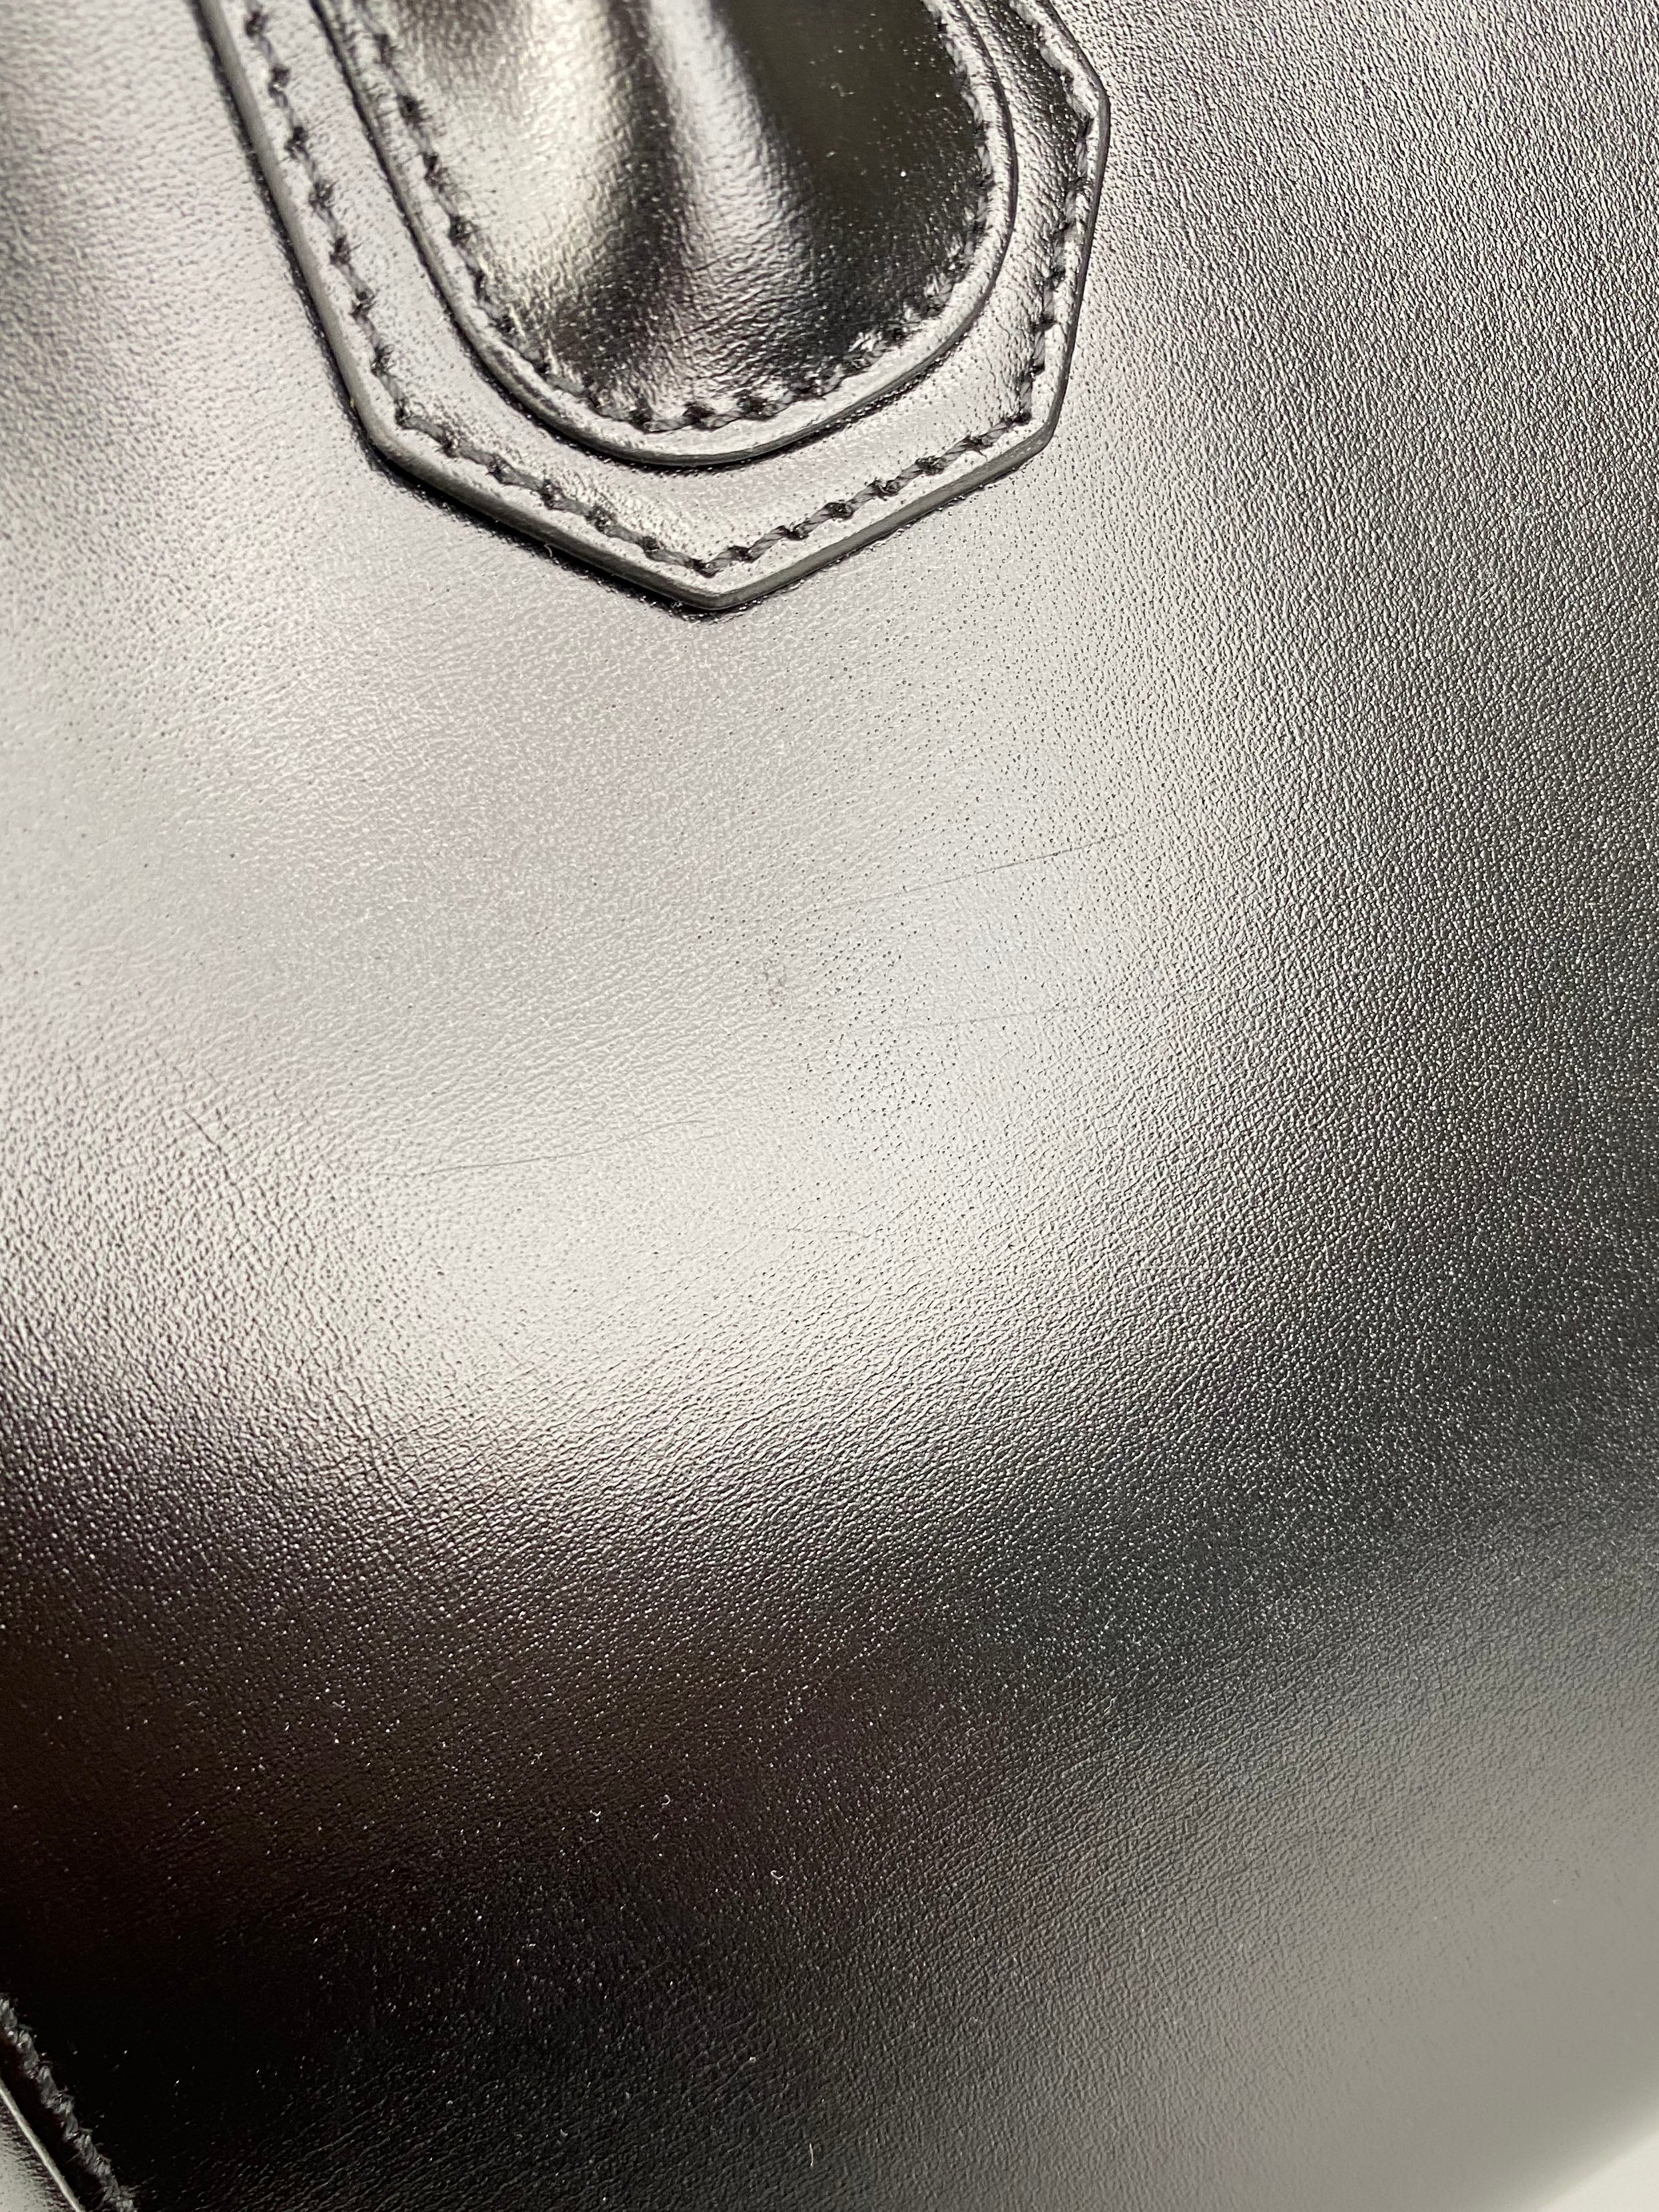 Givenchy Medium Black Antigona Tote Bag